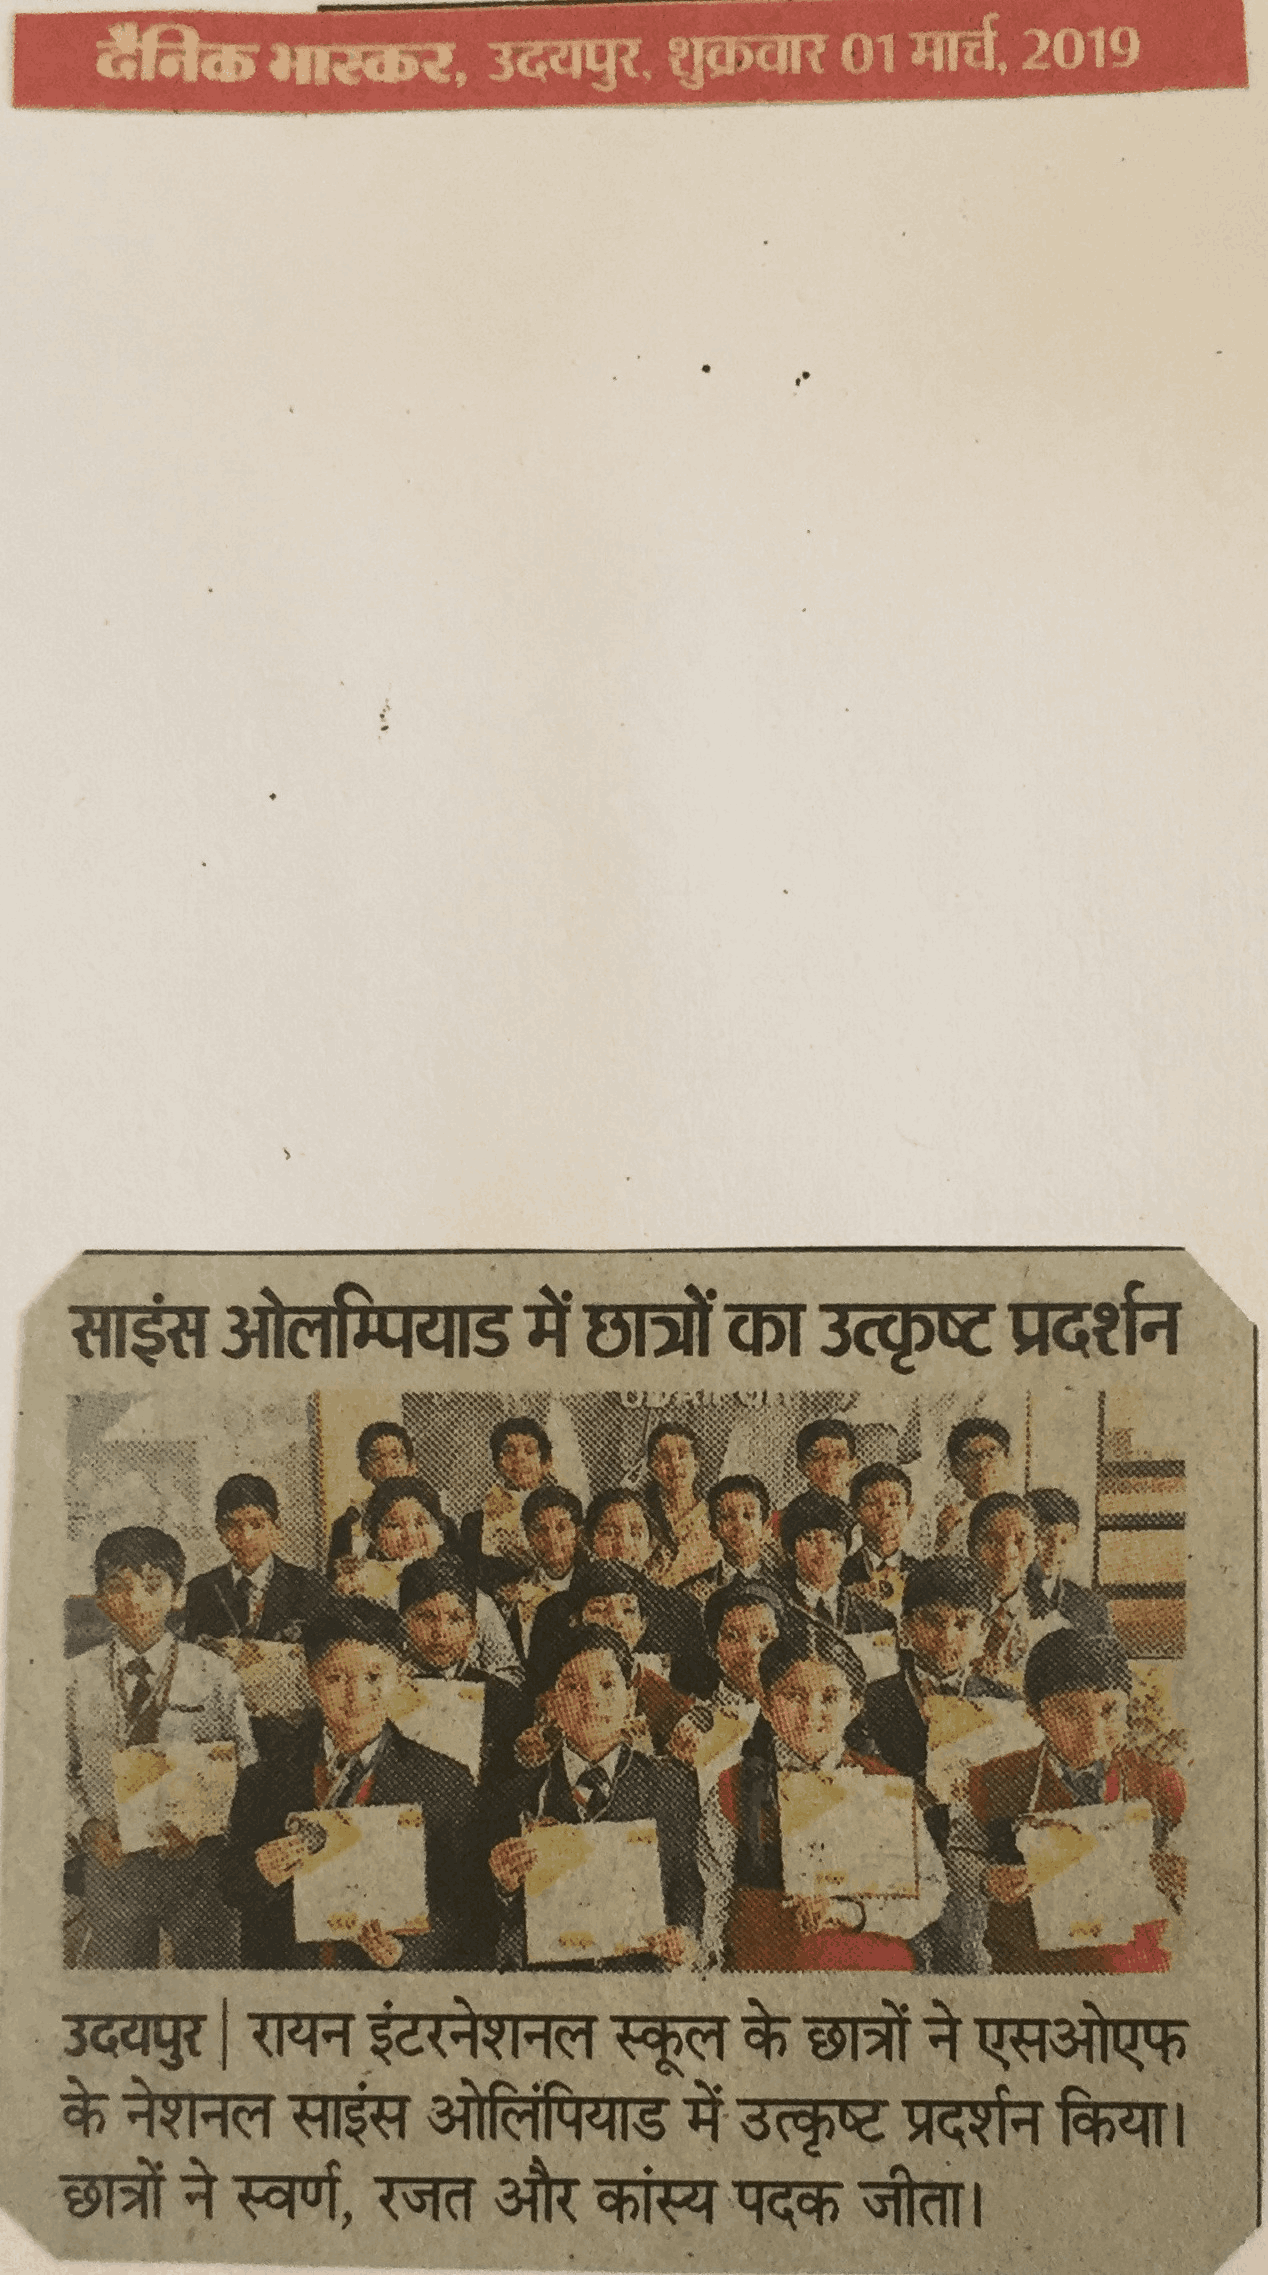 NATIONAL SCIENCE OLYMPIAD ACHIEVERS - Ryan international School, Udaipur